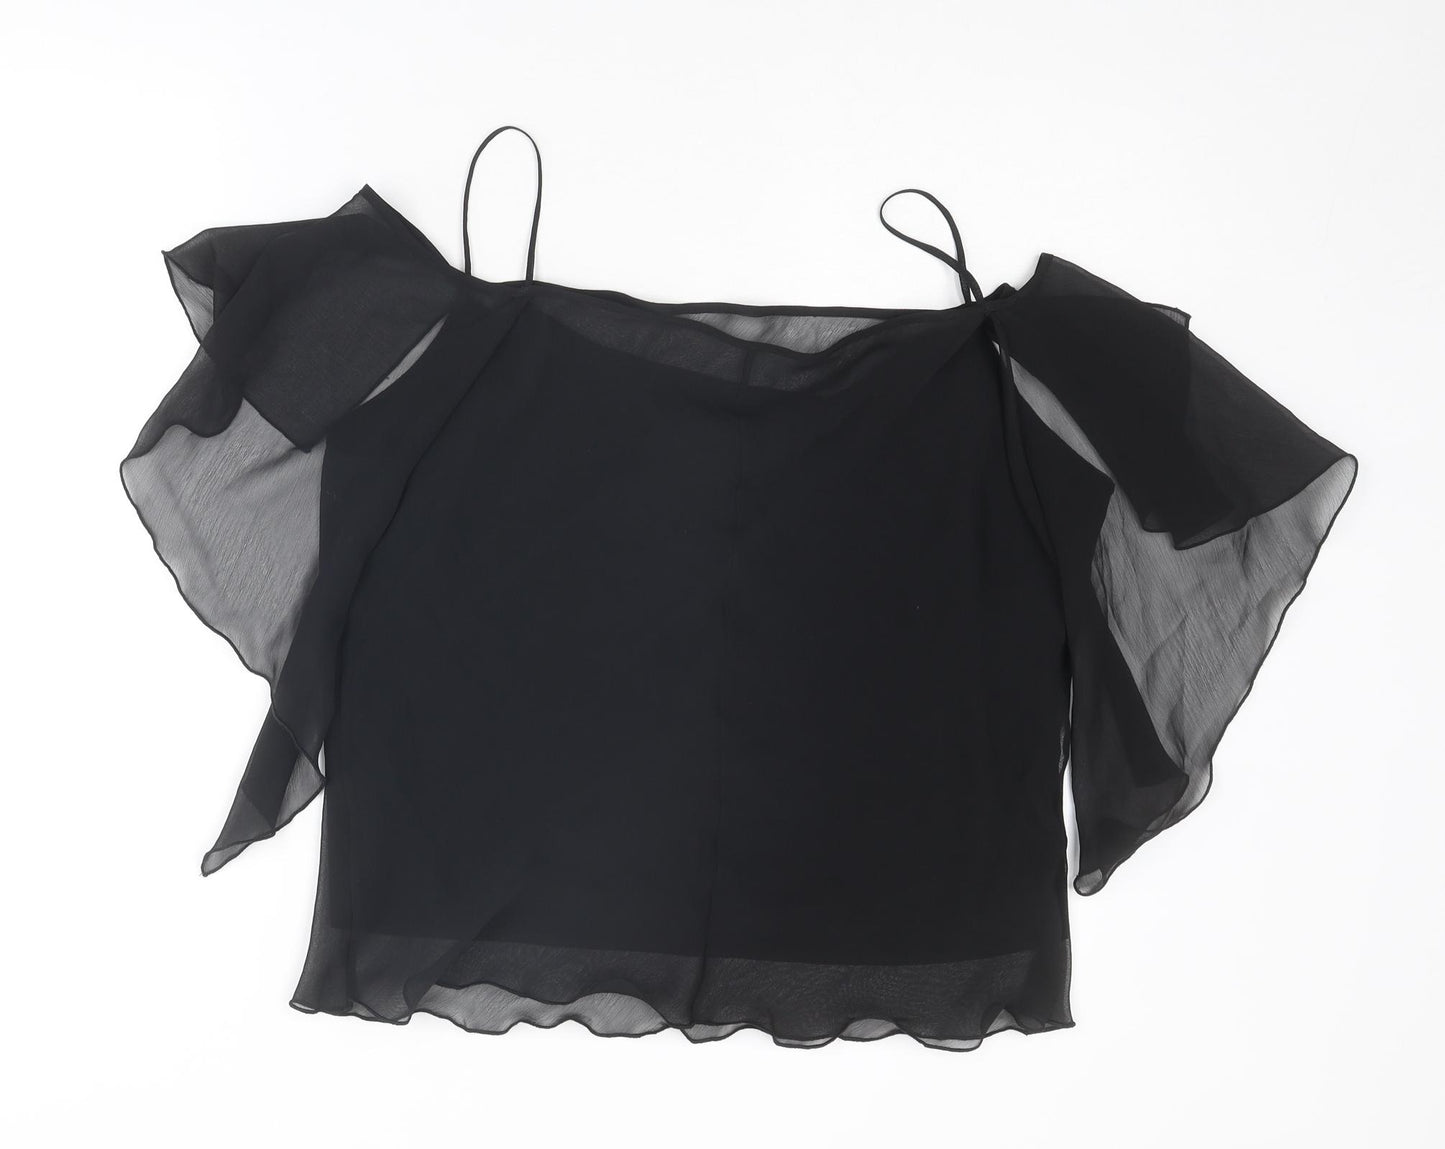 Wallis Womens Black Polyester Basic Blouse Size 18 Off the Shoulder